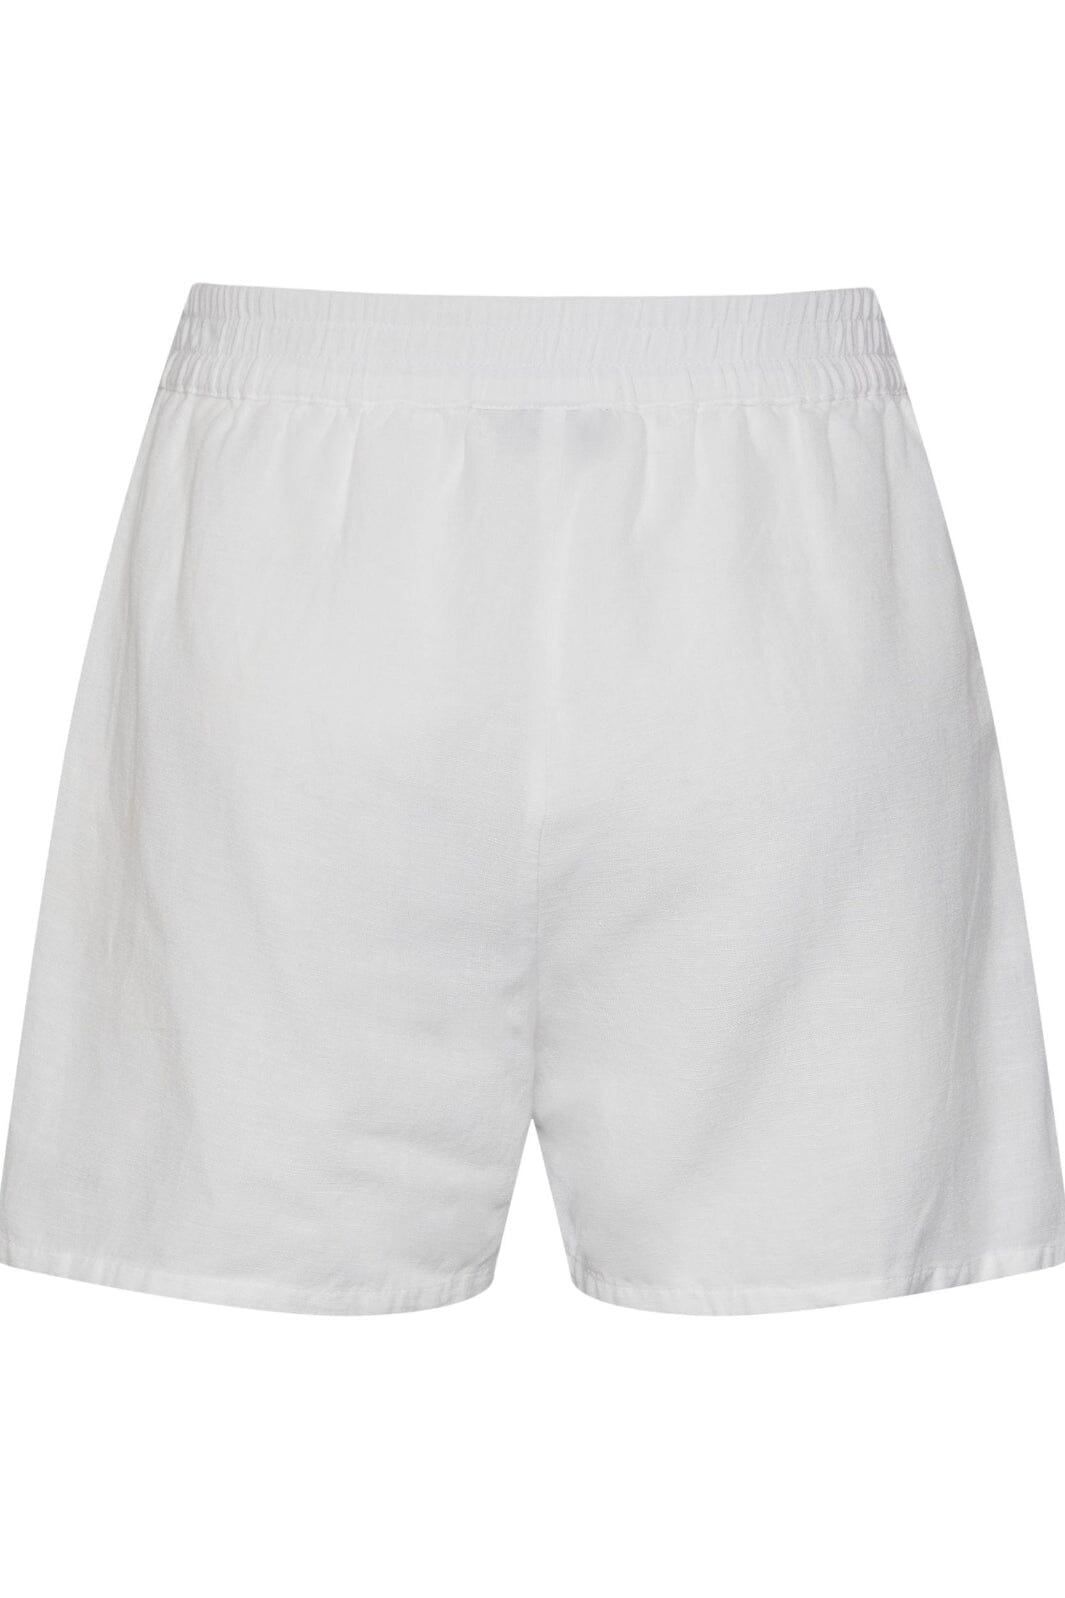 Pieces - Pcmilano Shorts Dmo - Bright White Shorts 